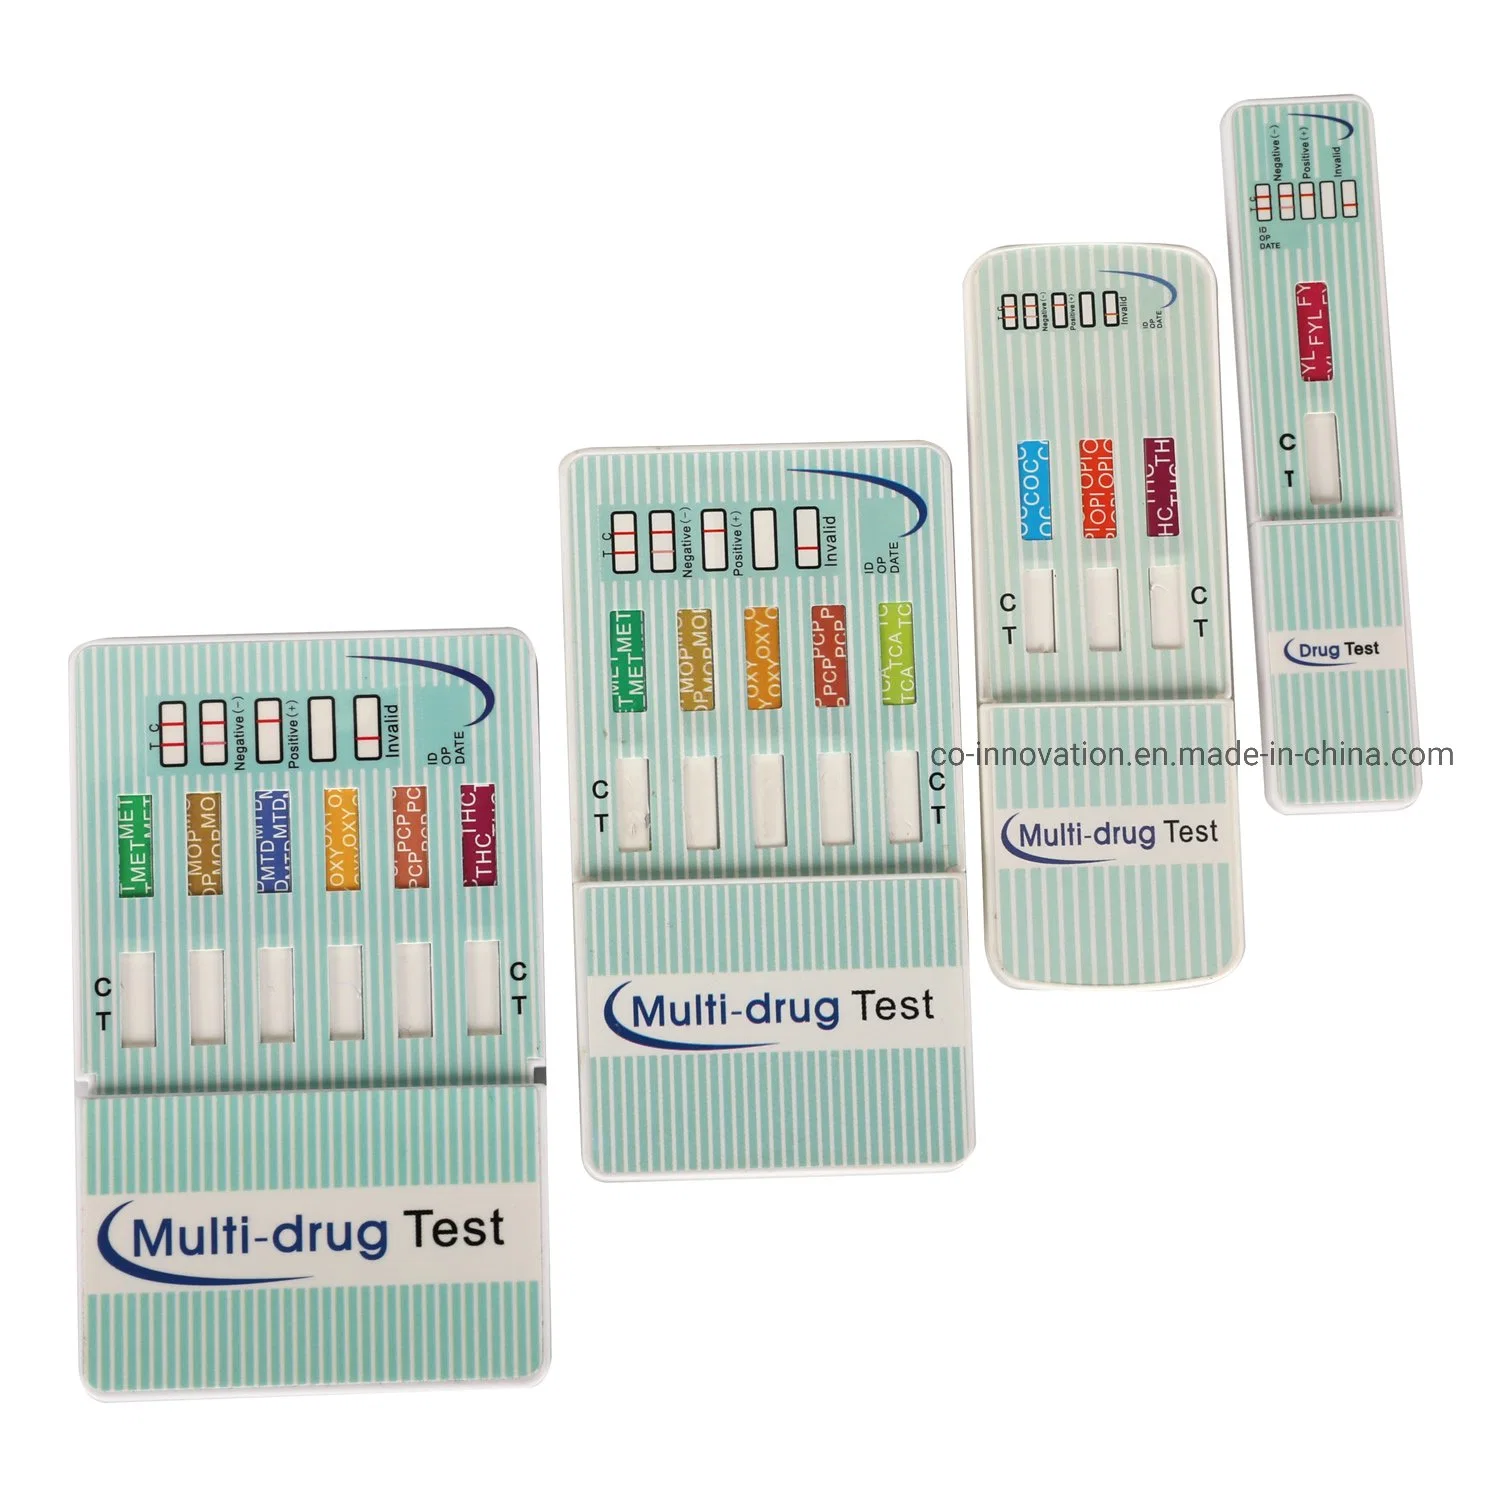 Etg Alcohol Urine Test Dipcard 500ng/Ml Drug Abuse Testing Kits in Vitro Diagnostic